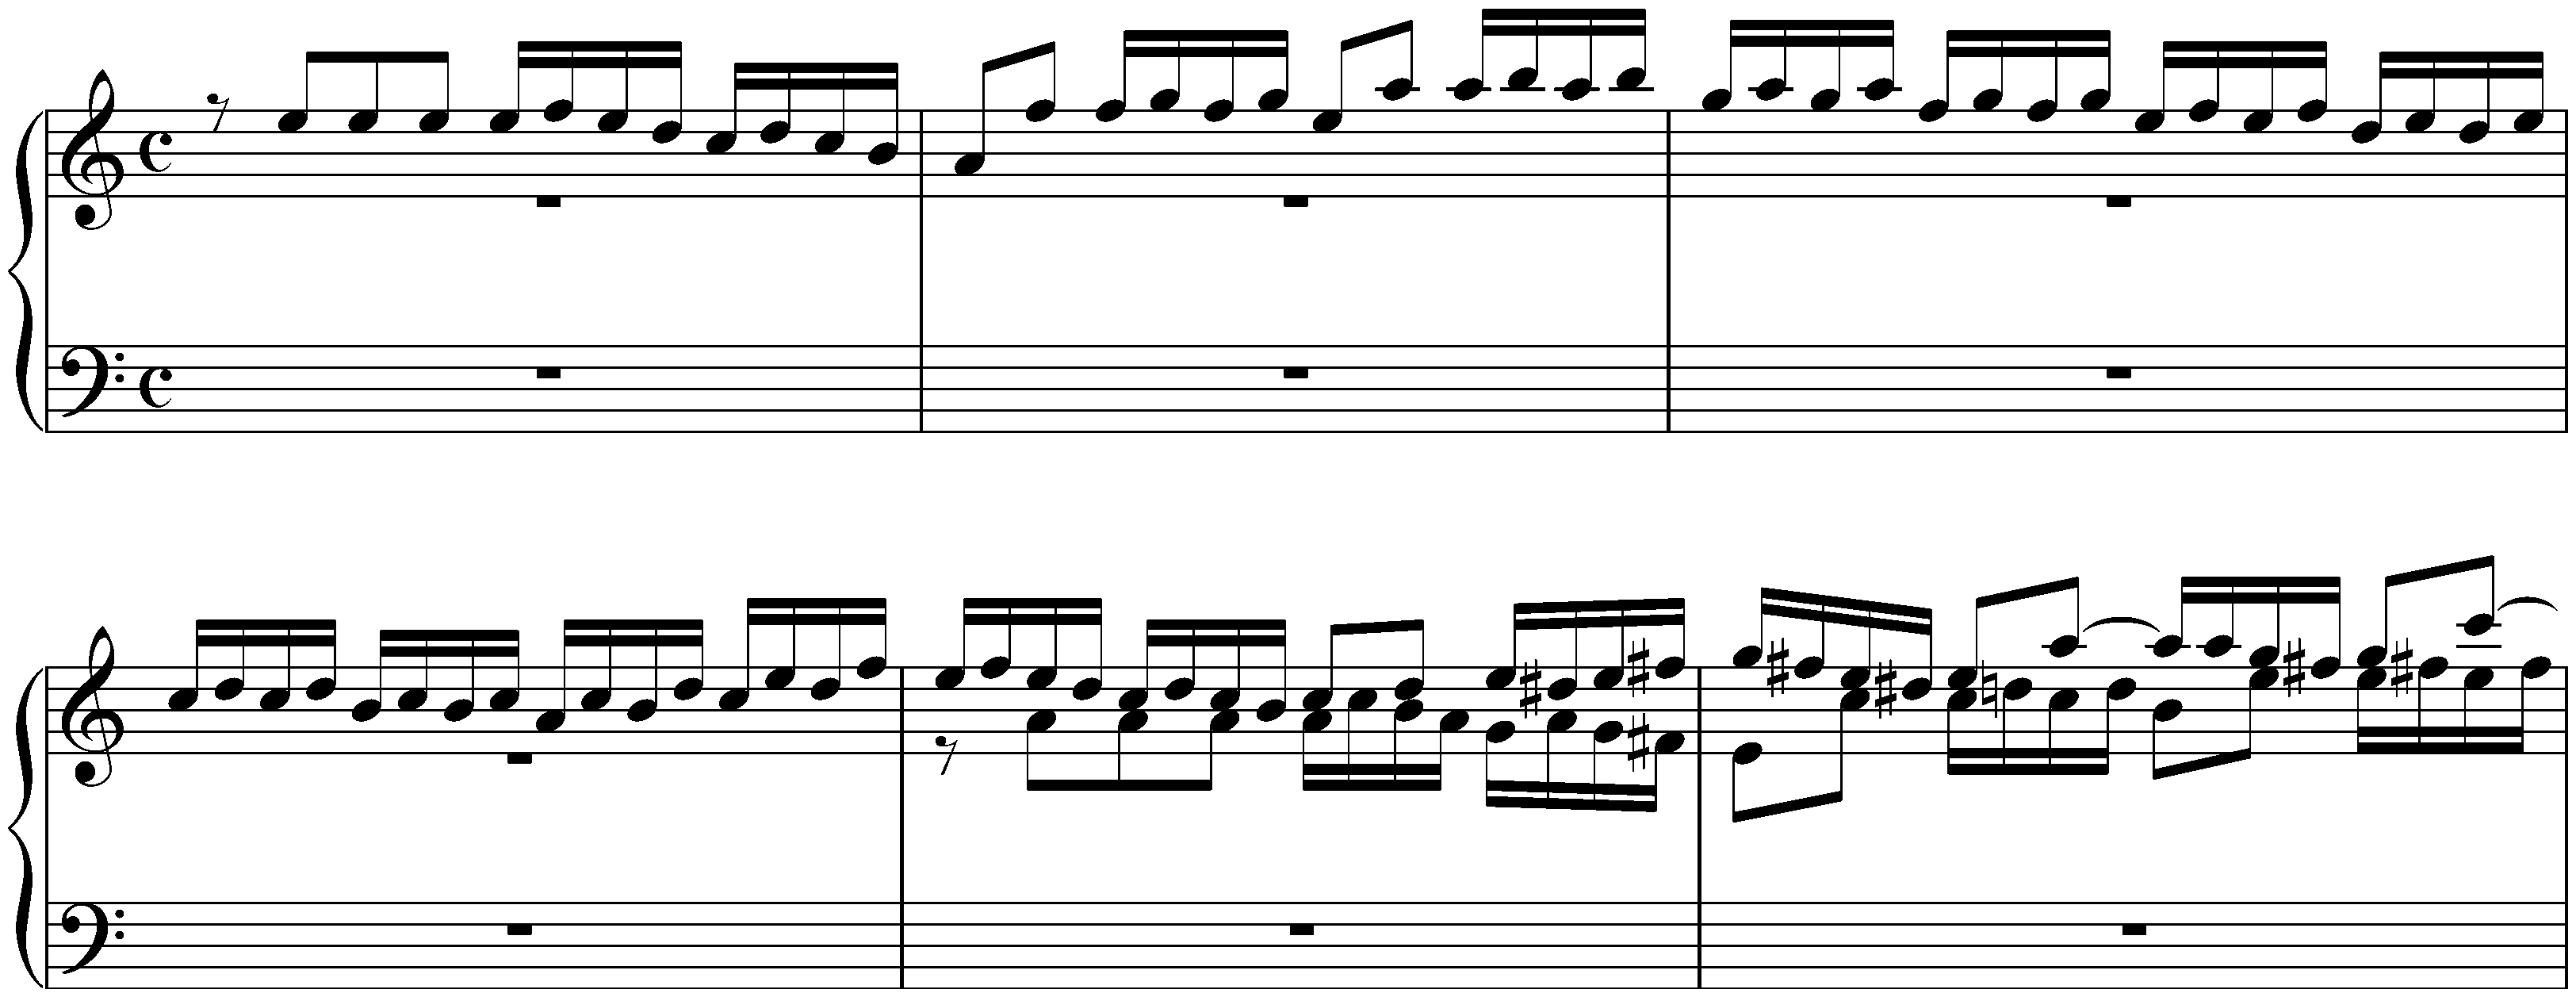 Sonata in A minor after Johann Adam Reincken, BWV 965; 2. Fuga